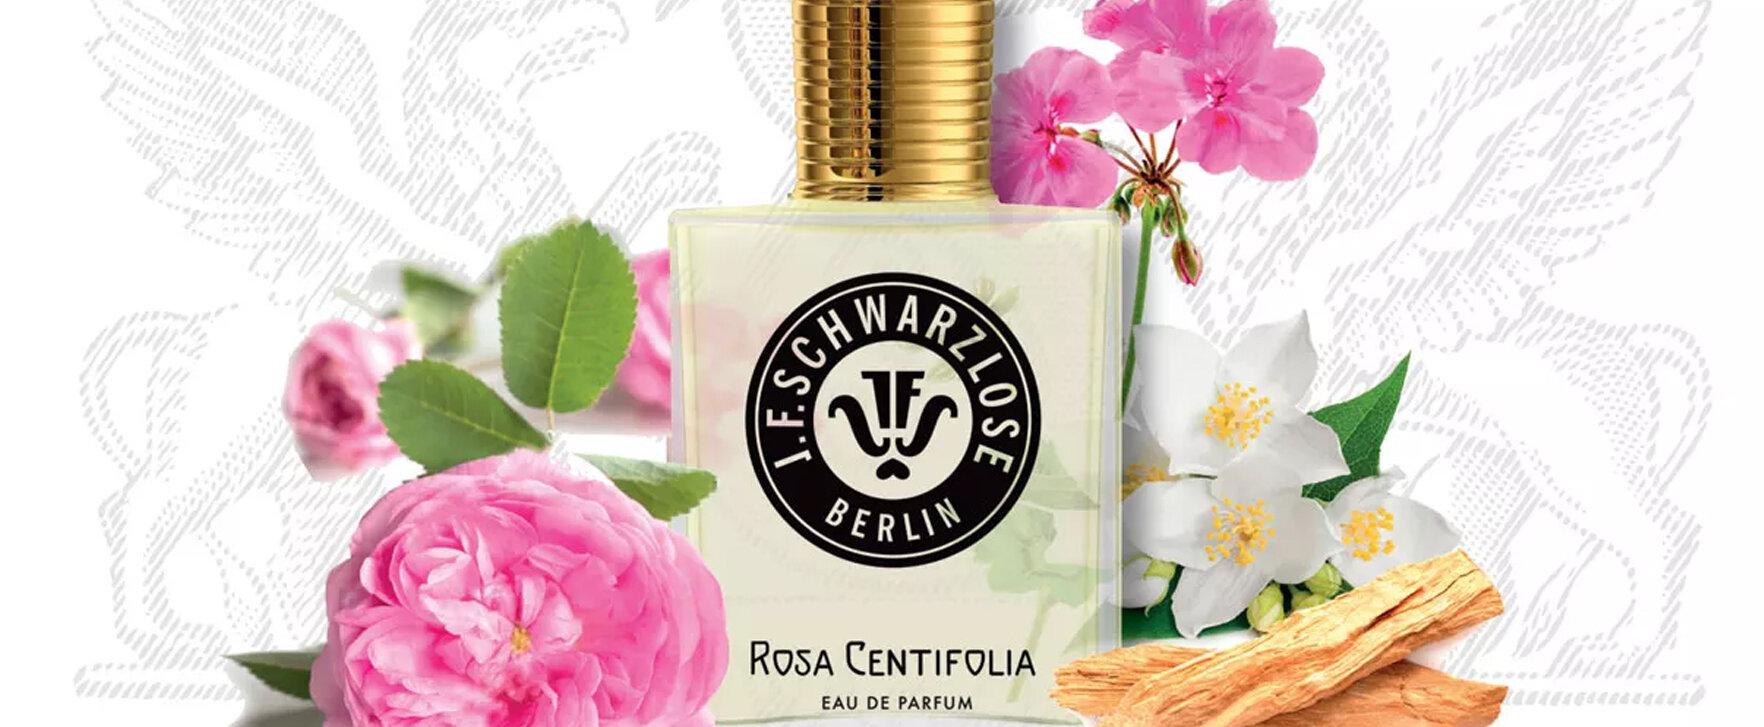 „Rosa Centifolia“ - J.F. Schwarzlose Berlin bringt Neuauflage des Rosenklassikers